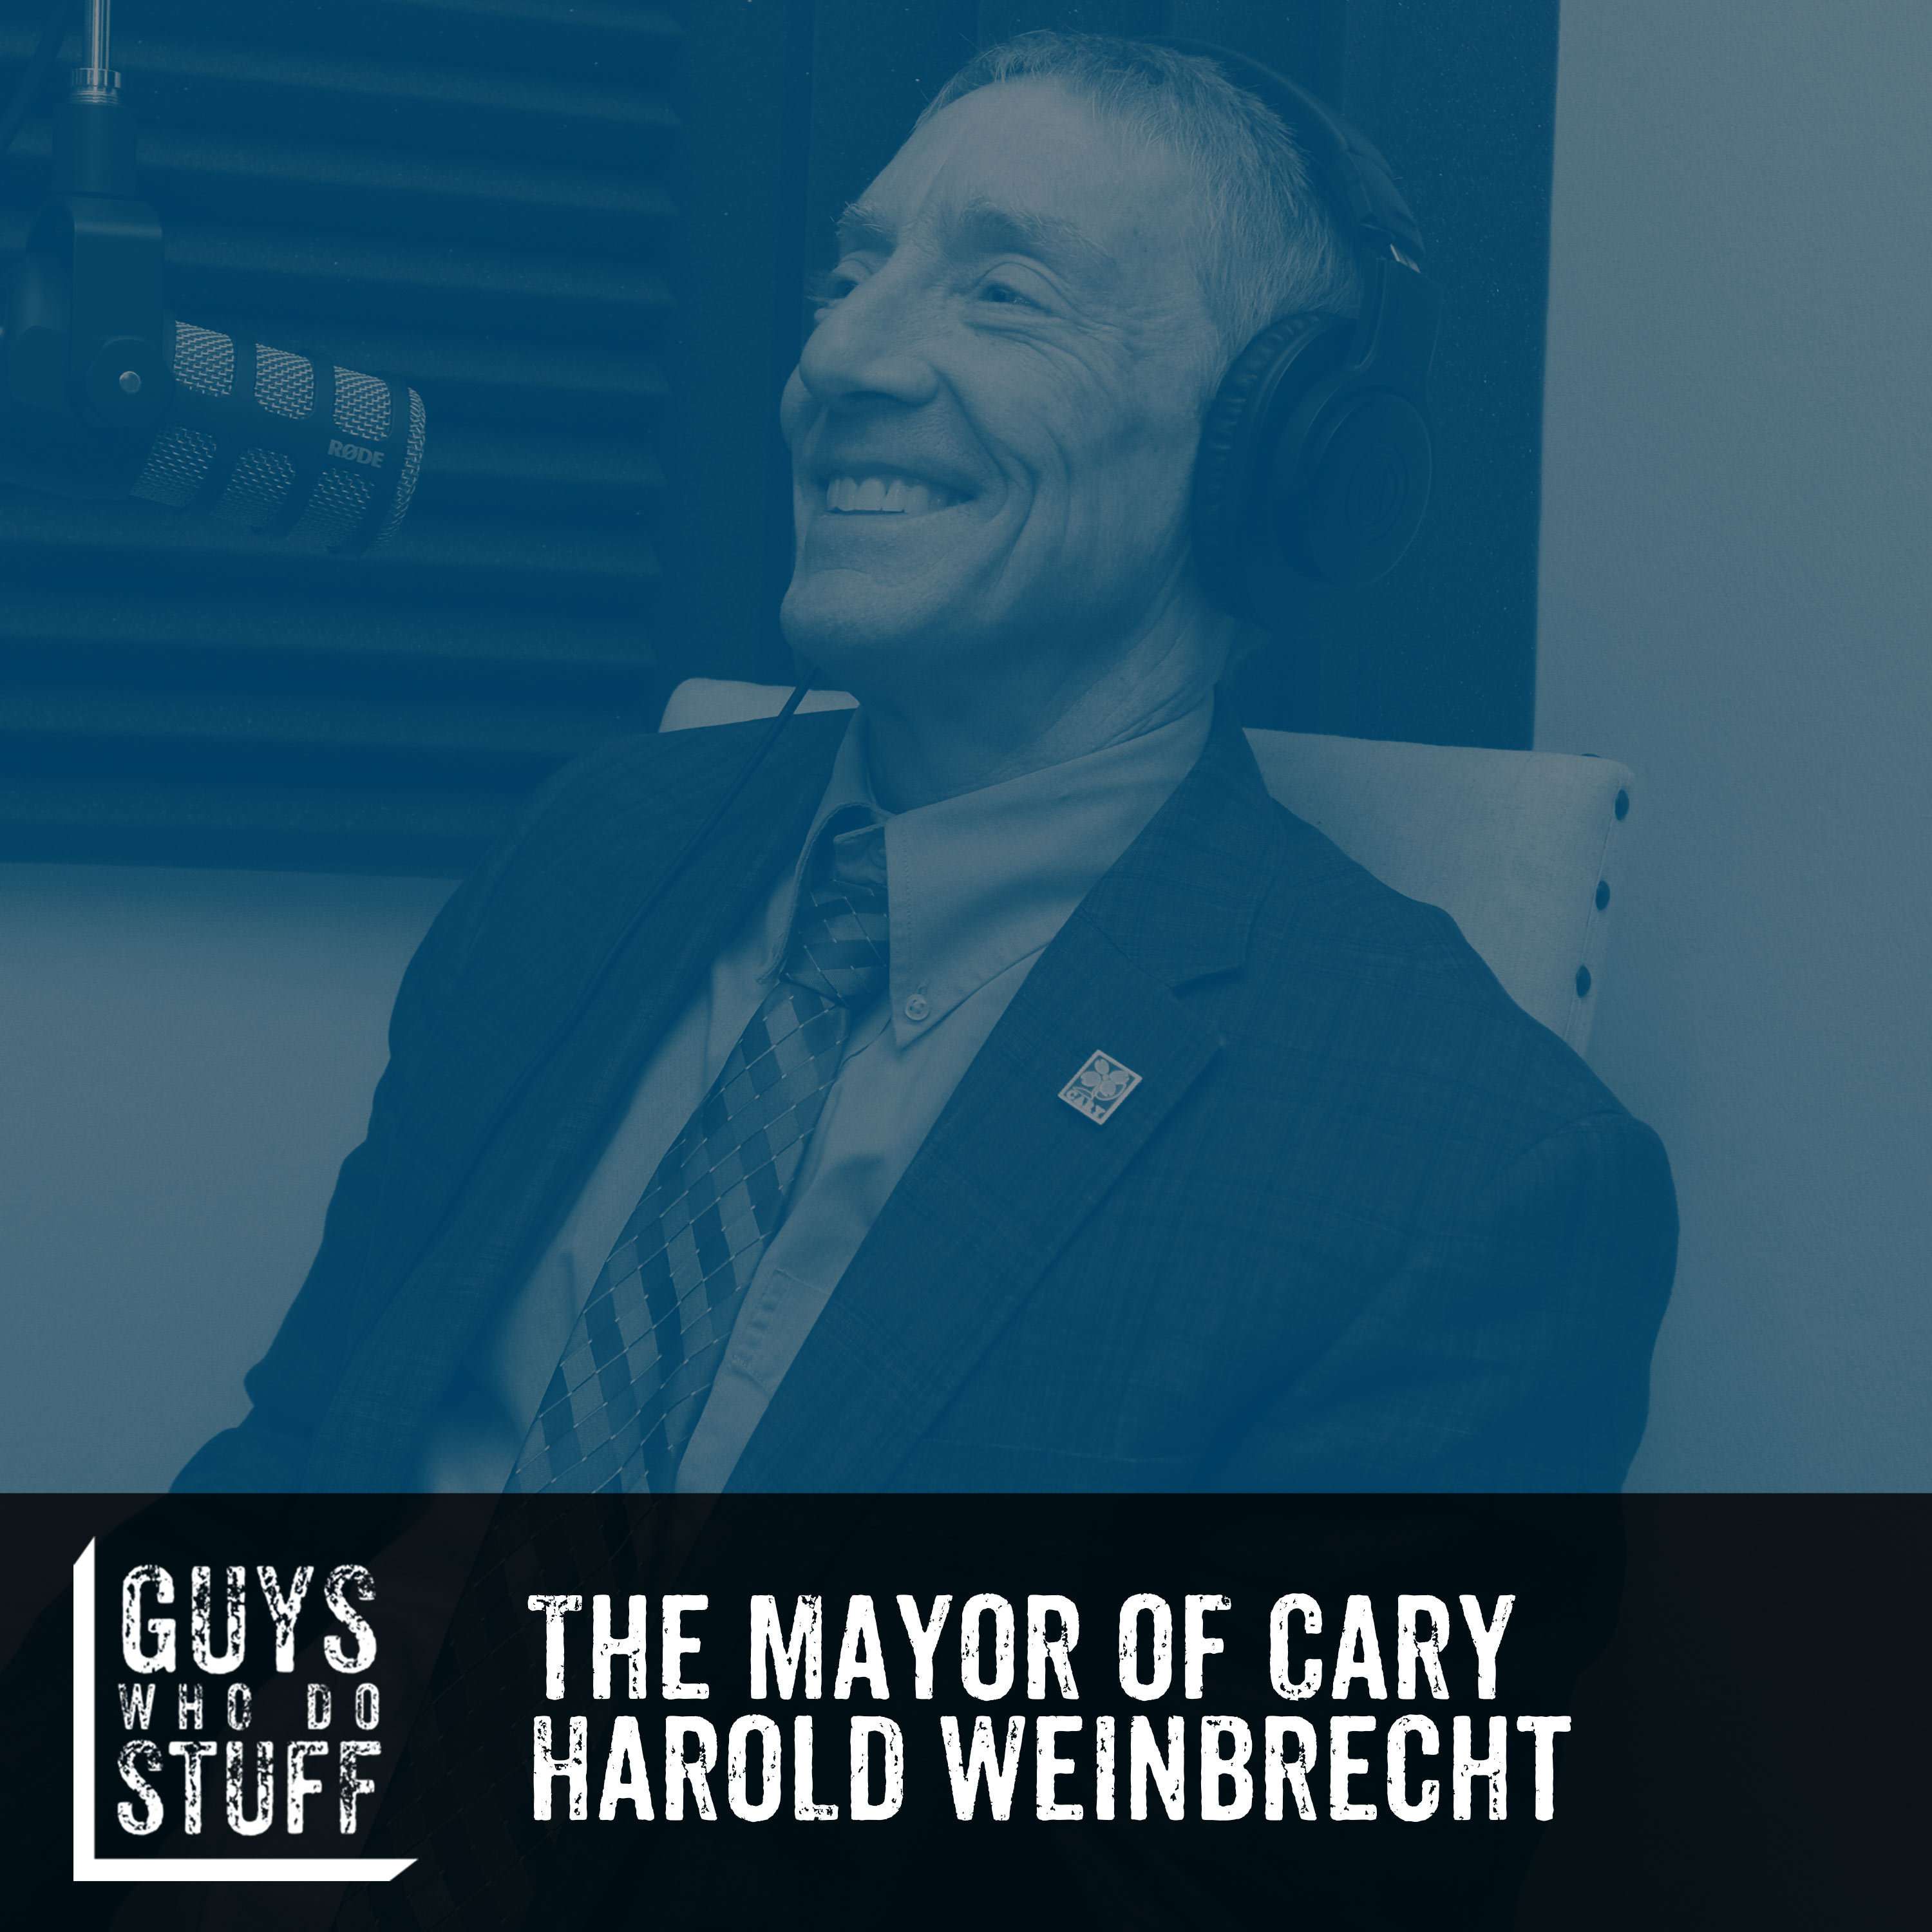 The Mayor of Cary Harold Weinbrecht